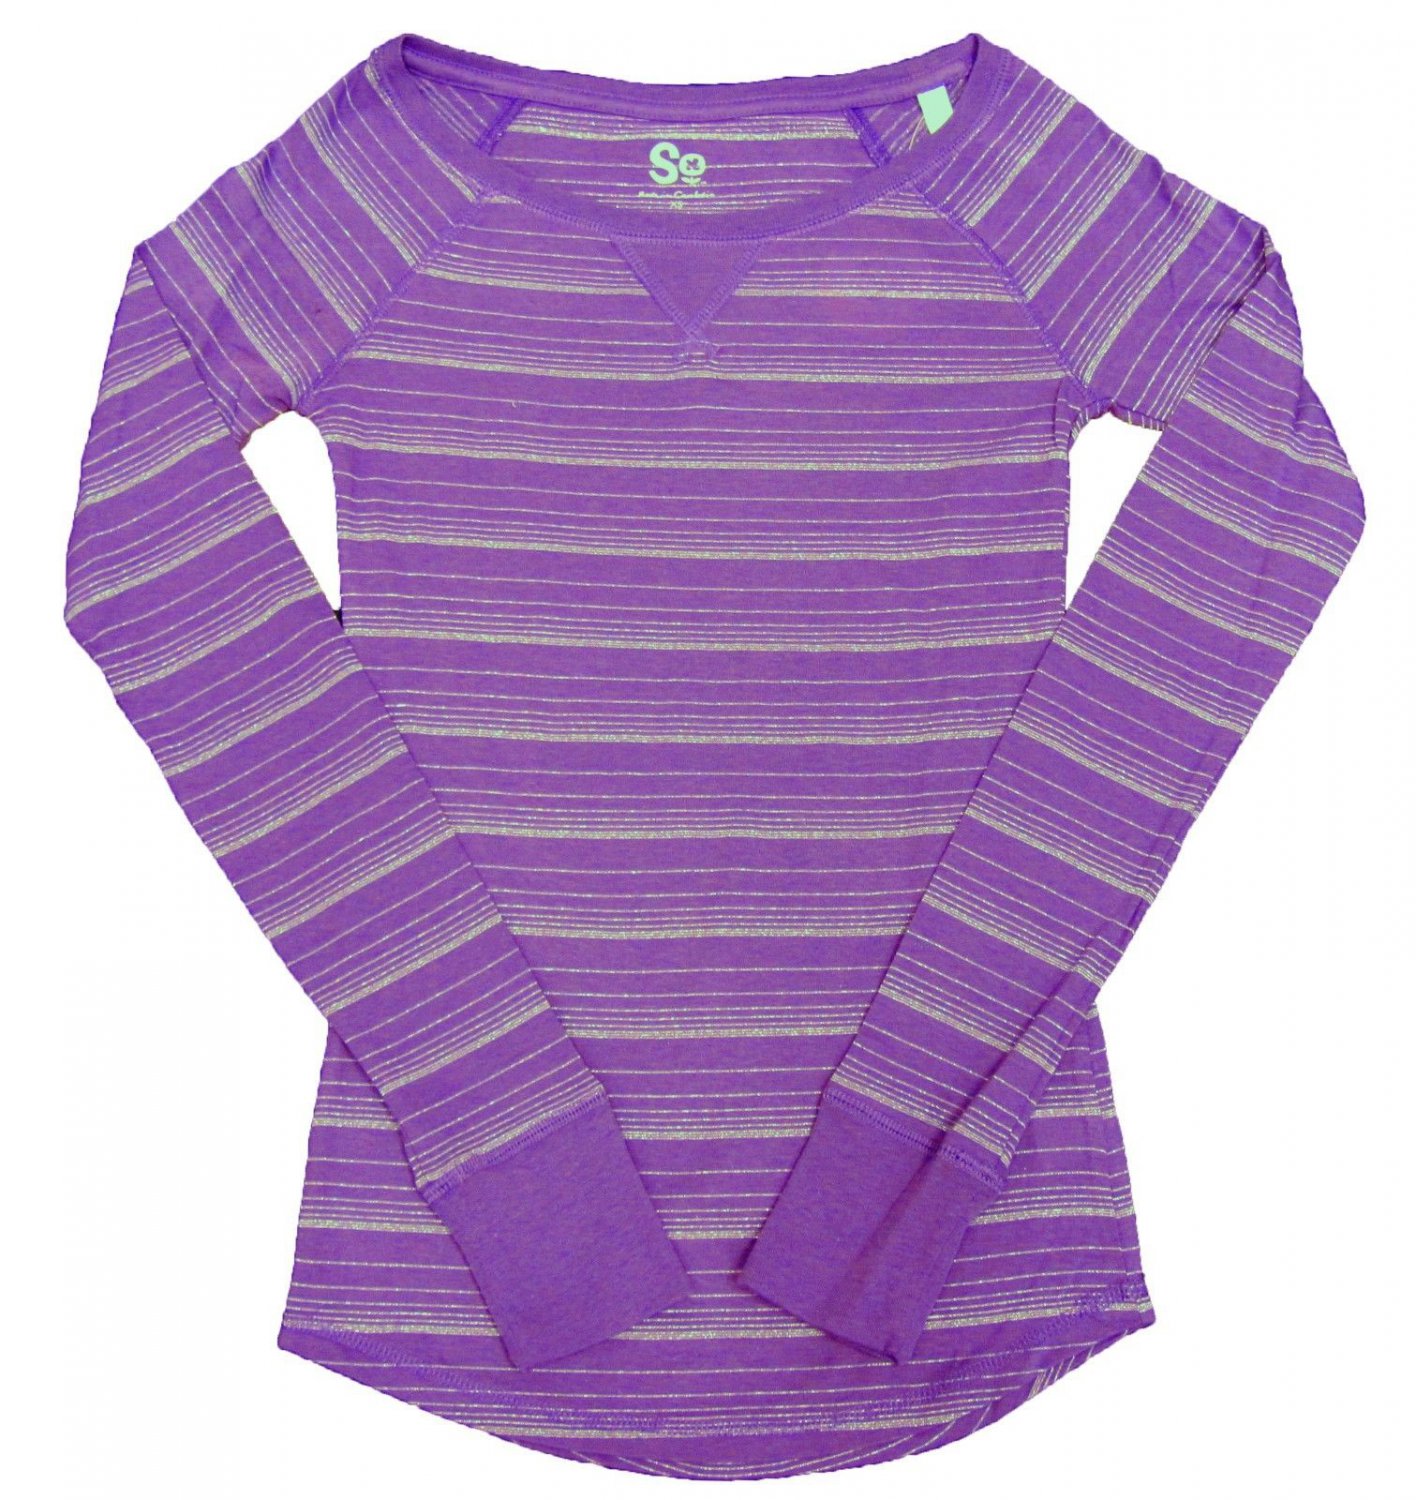 SO Juniors M Purple Stripe Raglan Tee Shirt Long Sleeve Medium New